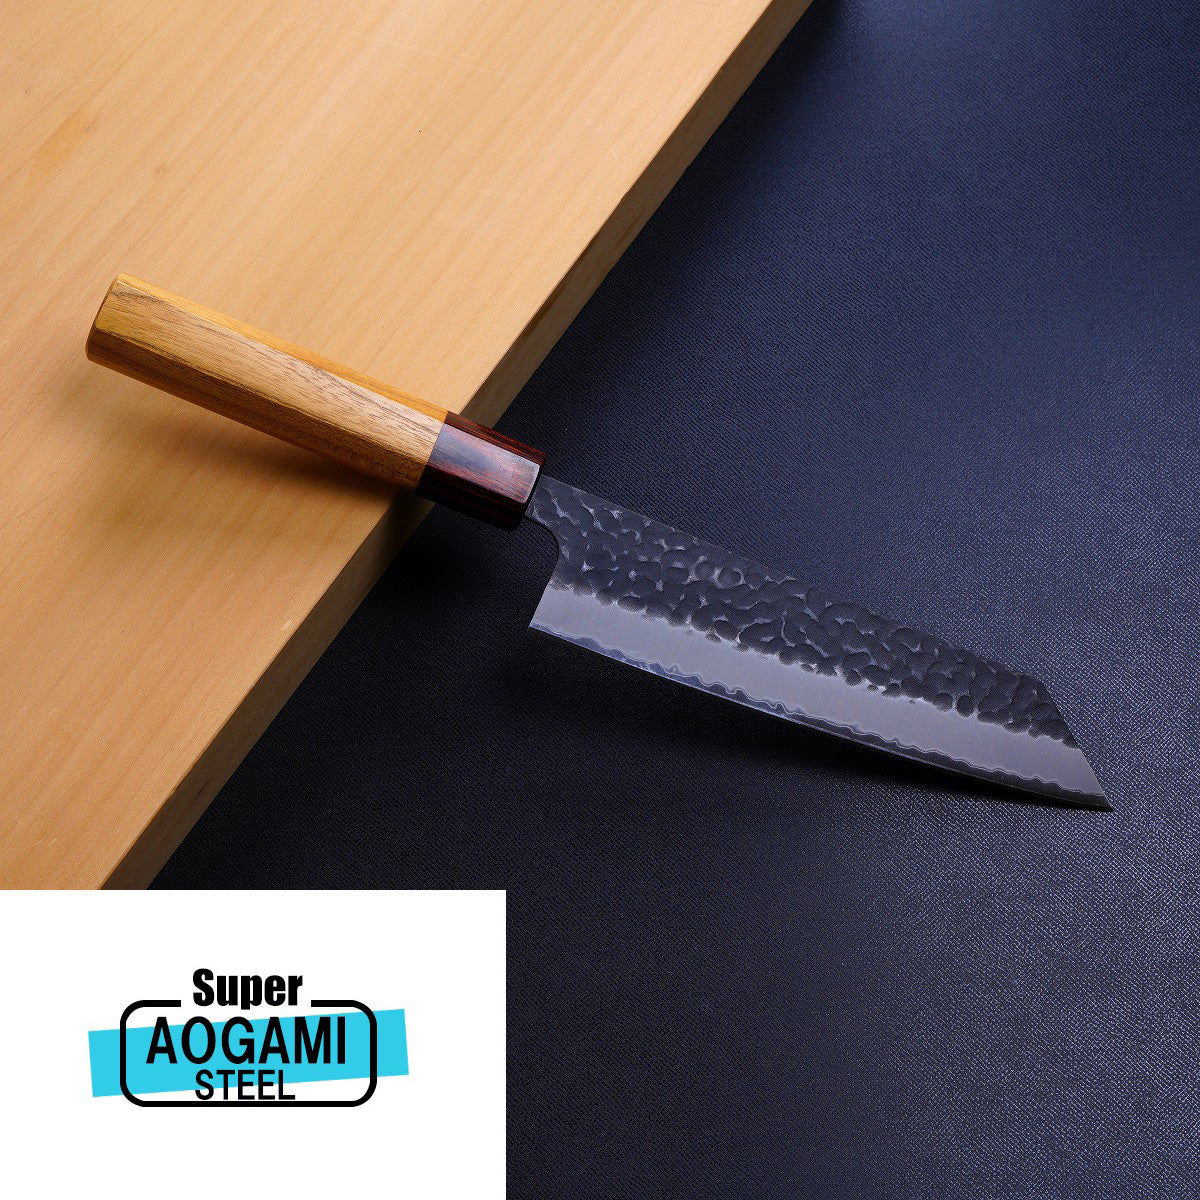 "HONMAMON" Bunka (Multi-Purpose Knife) Aogami Super Steel, 170mm